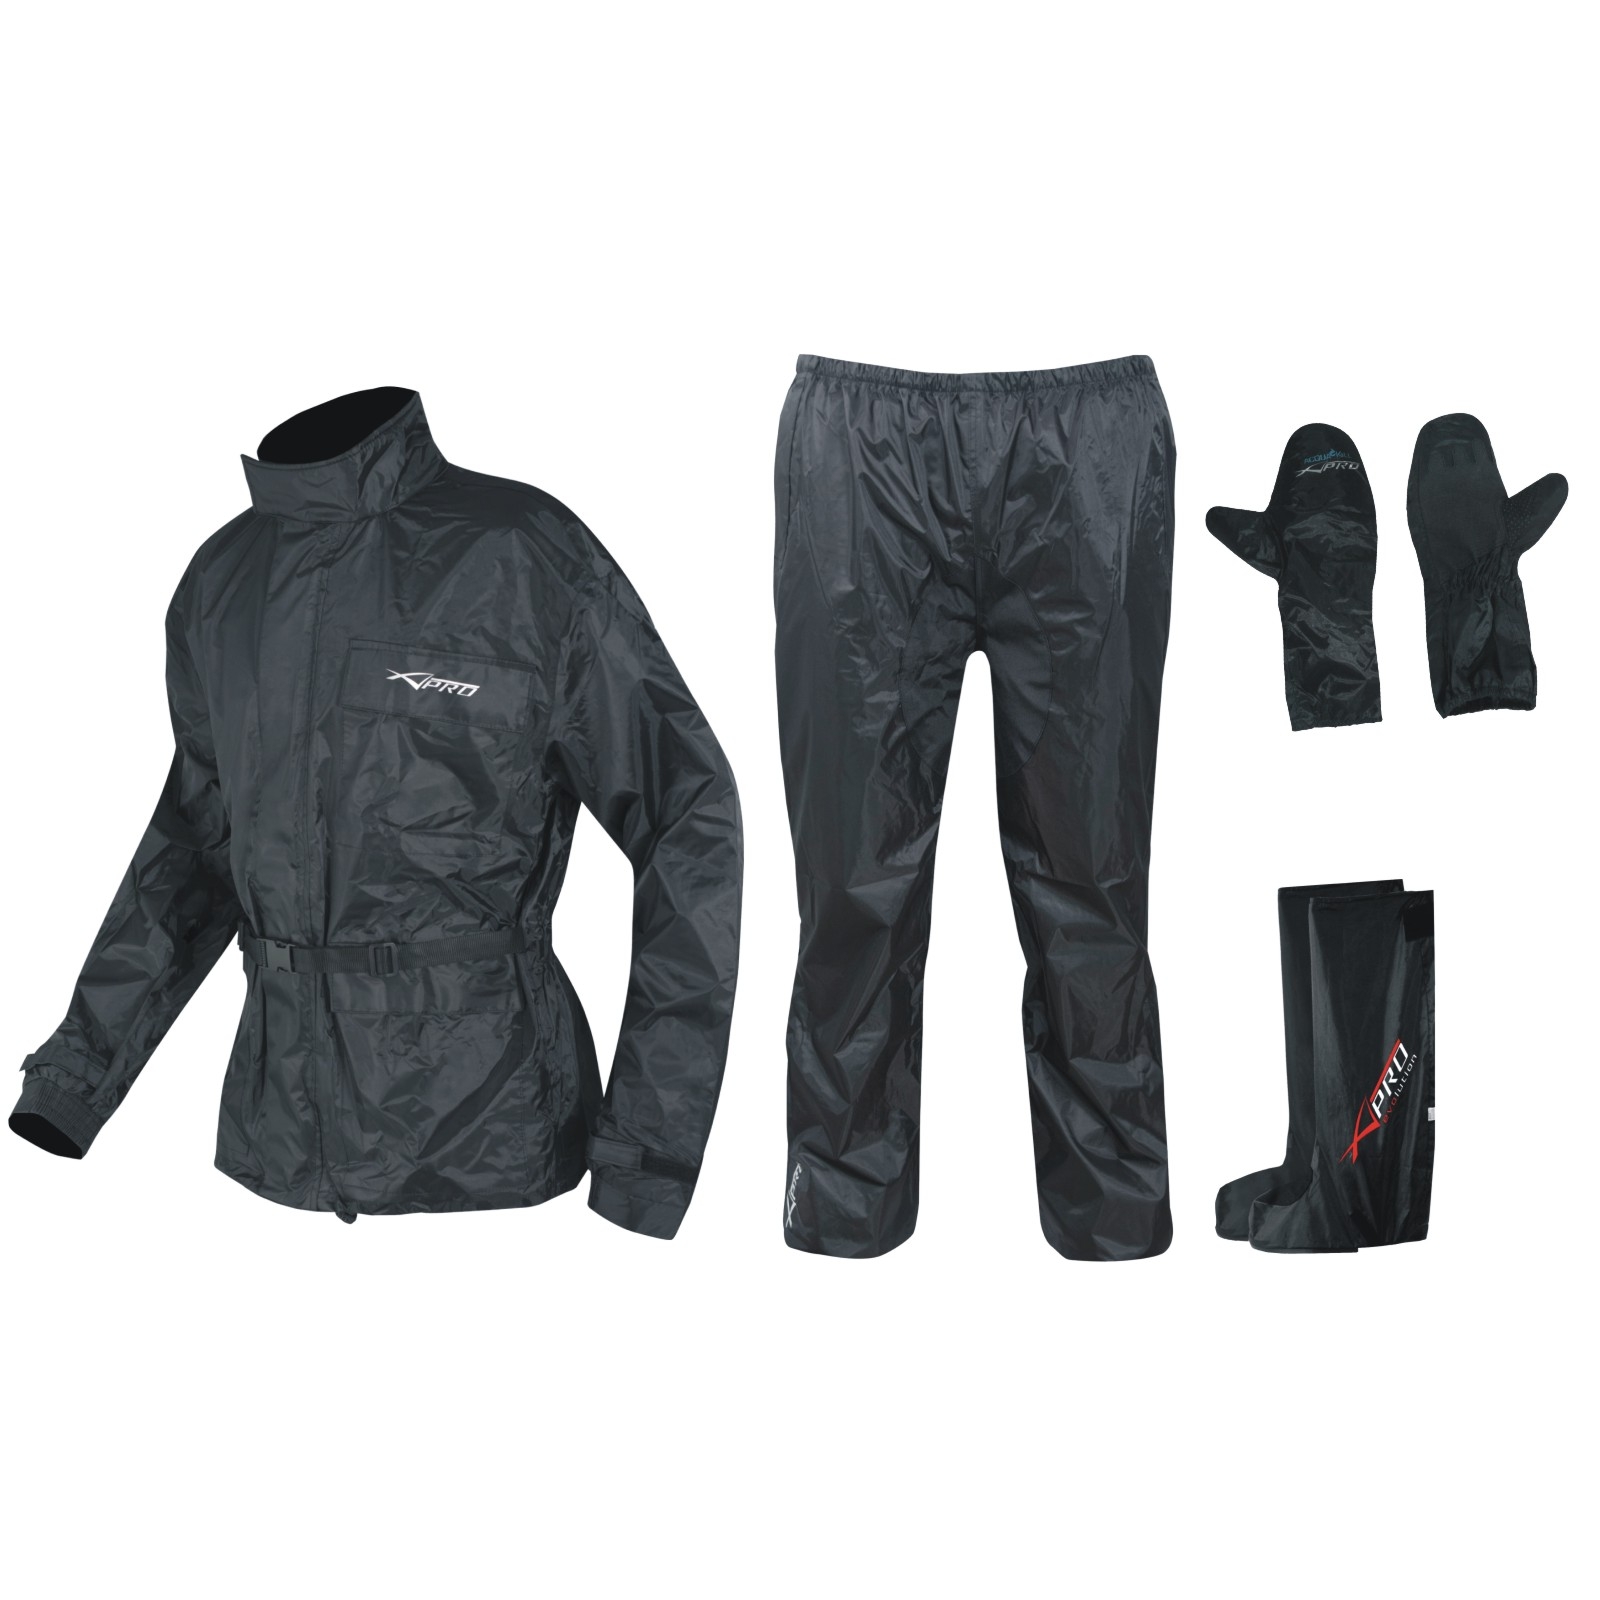 S-5XL MC Motorcycle Waterproof Rain Suit Jacket & Pants Gear For Men 4 Colors 